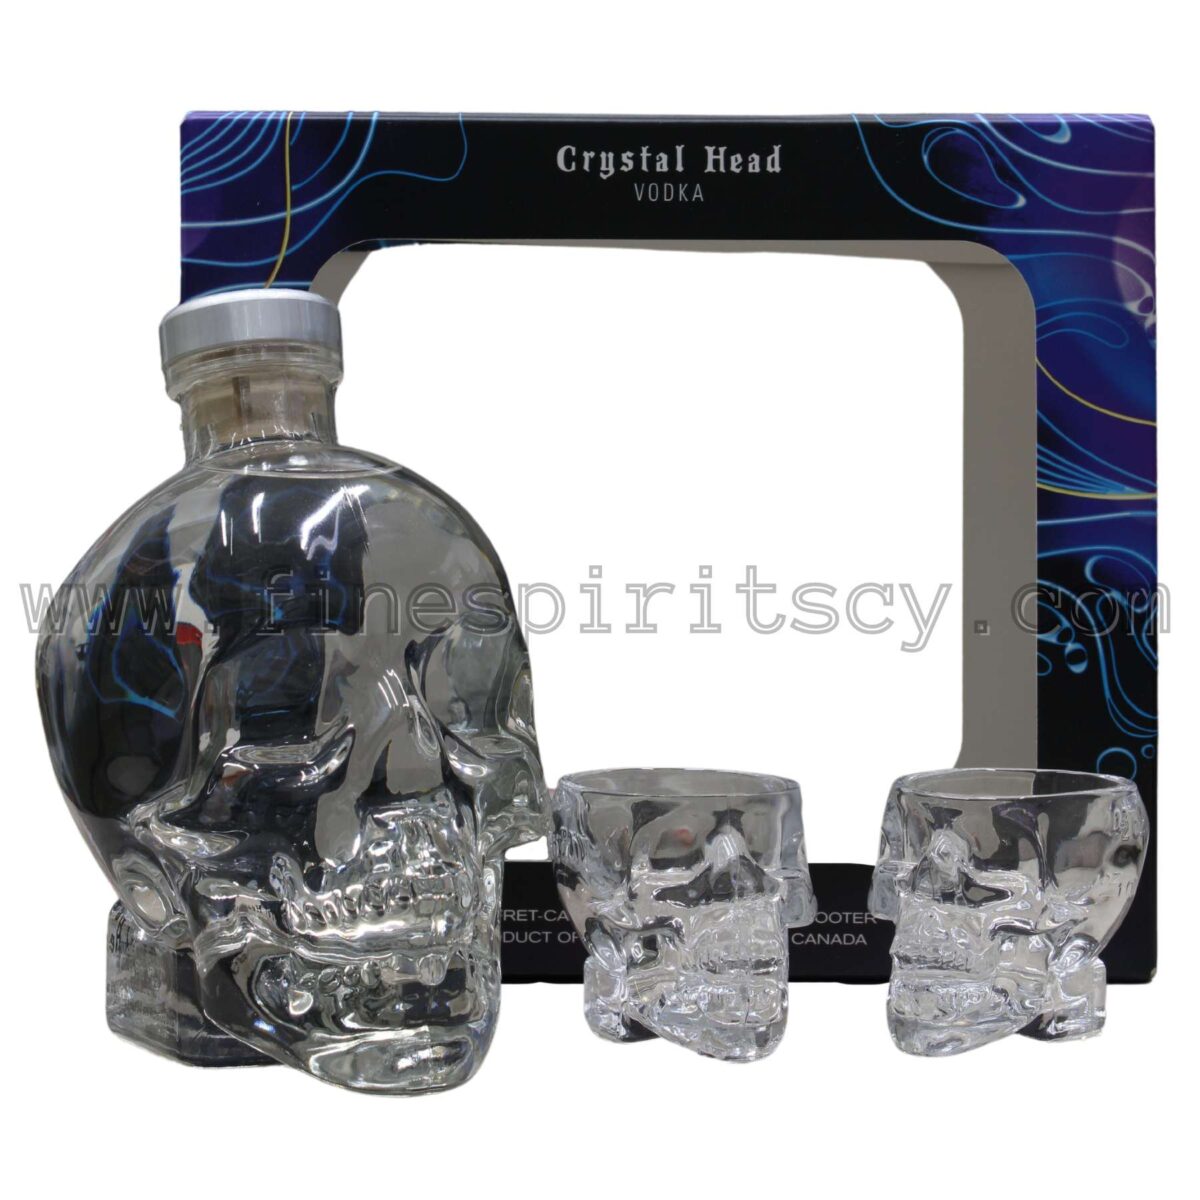 Crystal Head Original Vodka Gift Set Idea With 2 Two Shot Glasses Skull Shape